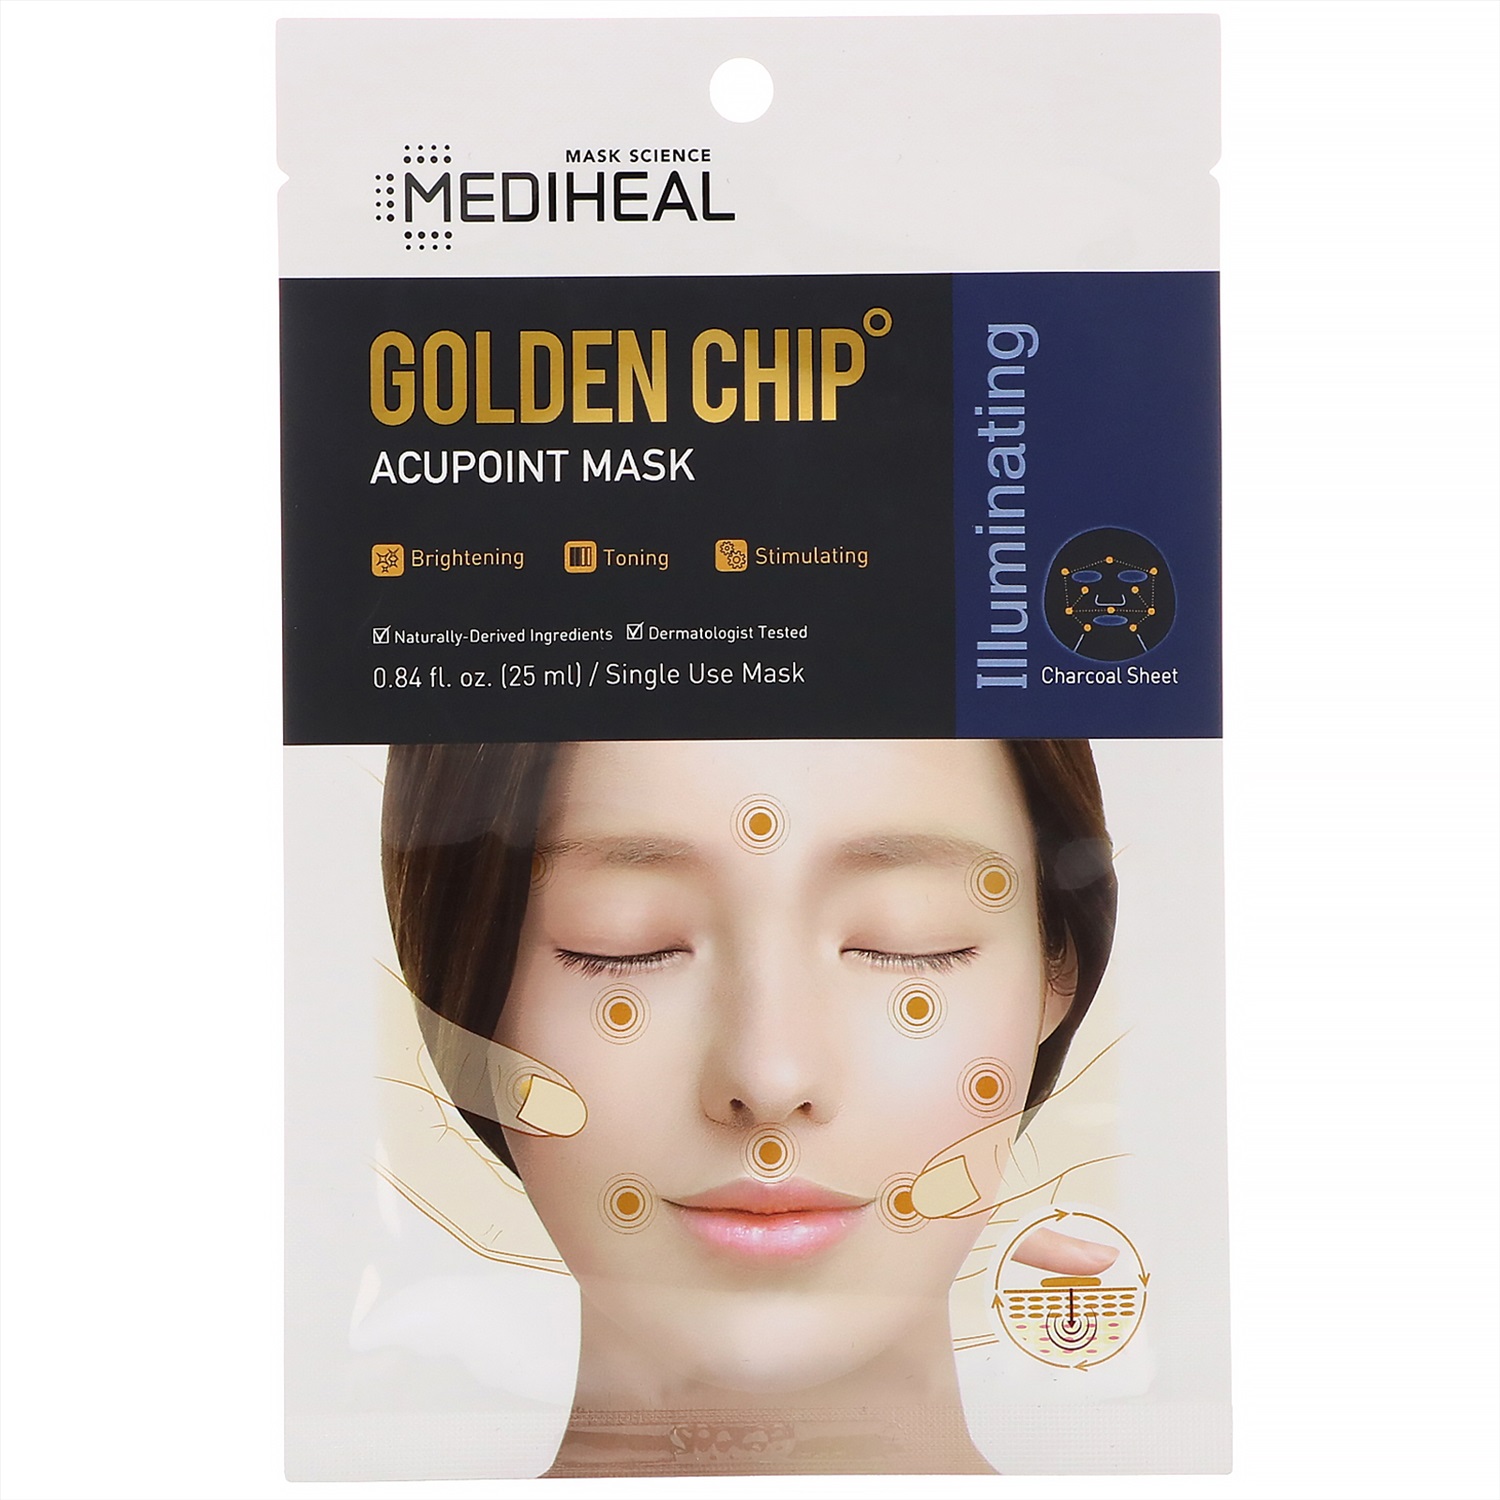 Золотые маски корея. Mediheal 3-шаговая маска для носа Piggy mom Soak Soak nose Pack. Mask Science Mediheal. Джун корейская маска. The Golden Chippy.